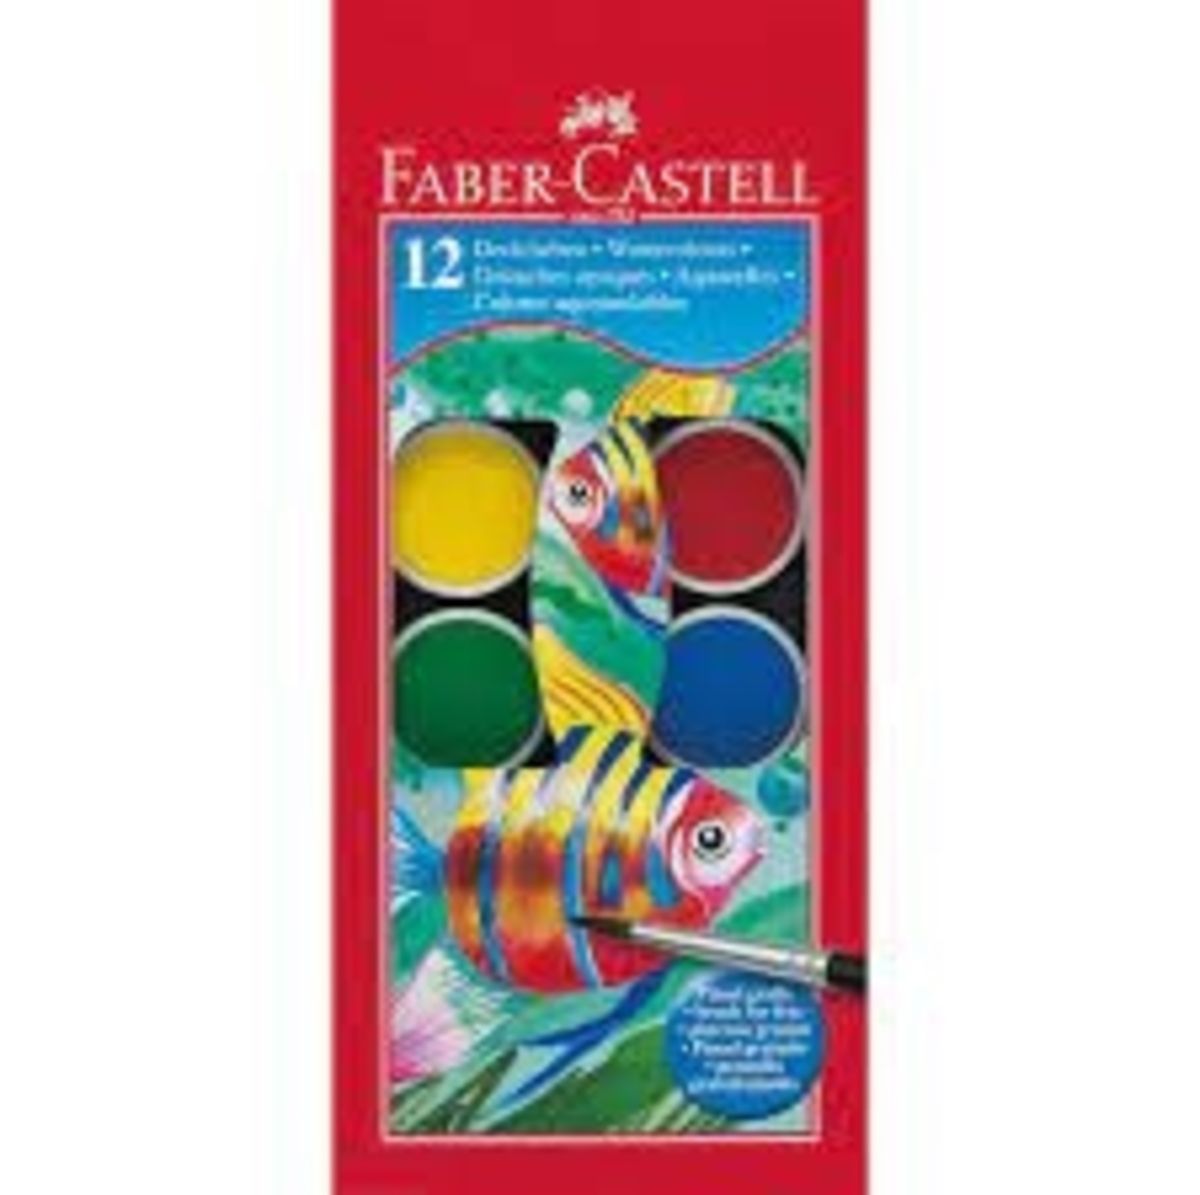 Faber Castell Faber Castel 12 Renk Sulu Boya Redline Küçük 5292